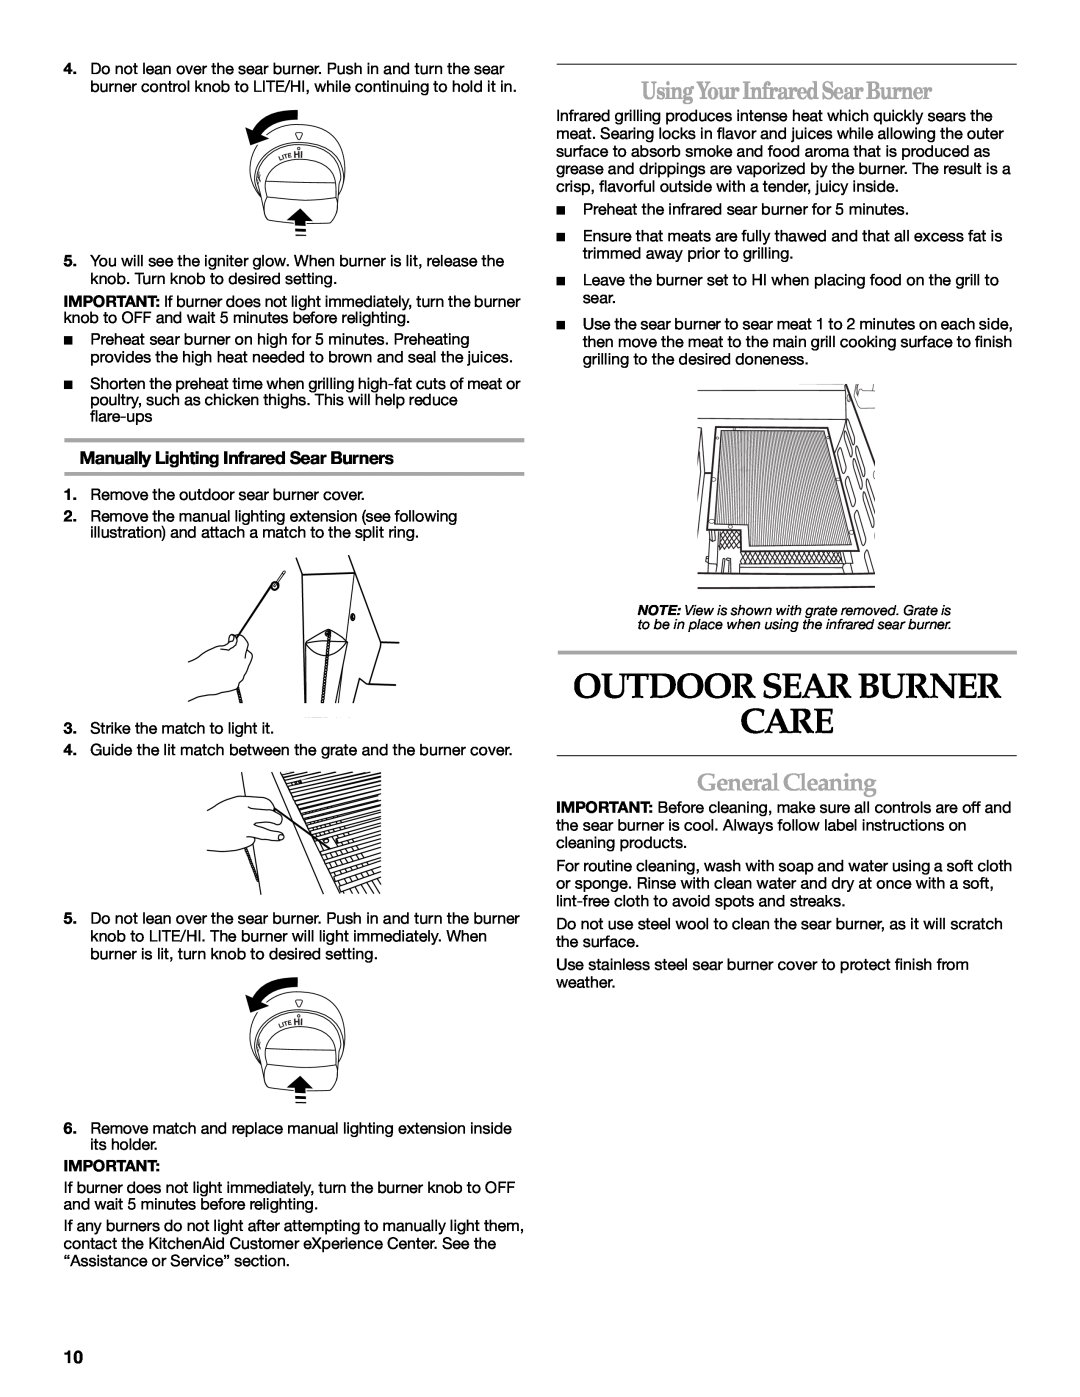 KitchenAid KBEU121T installation instructions Outdoor Sear Burner Care, UsingYourInfraredSearBurner, GeneralCleaning 